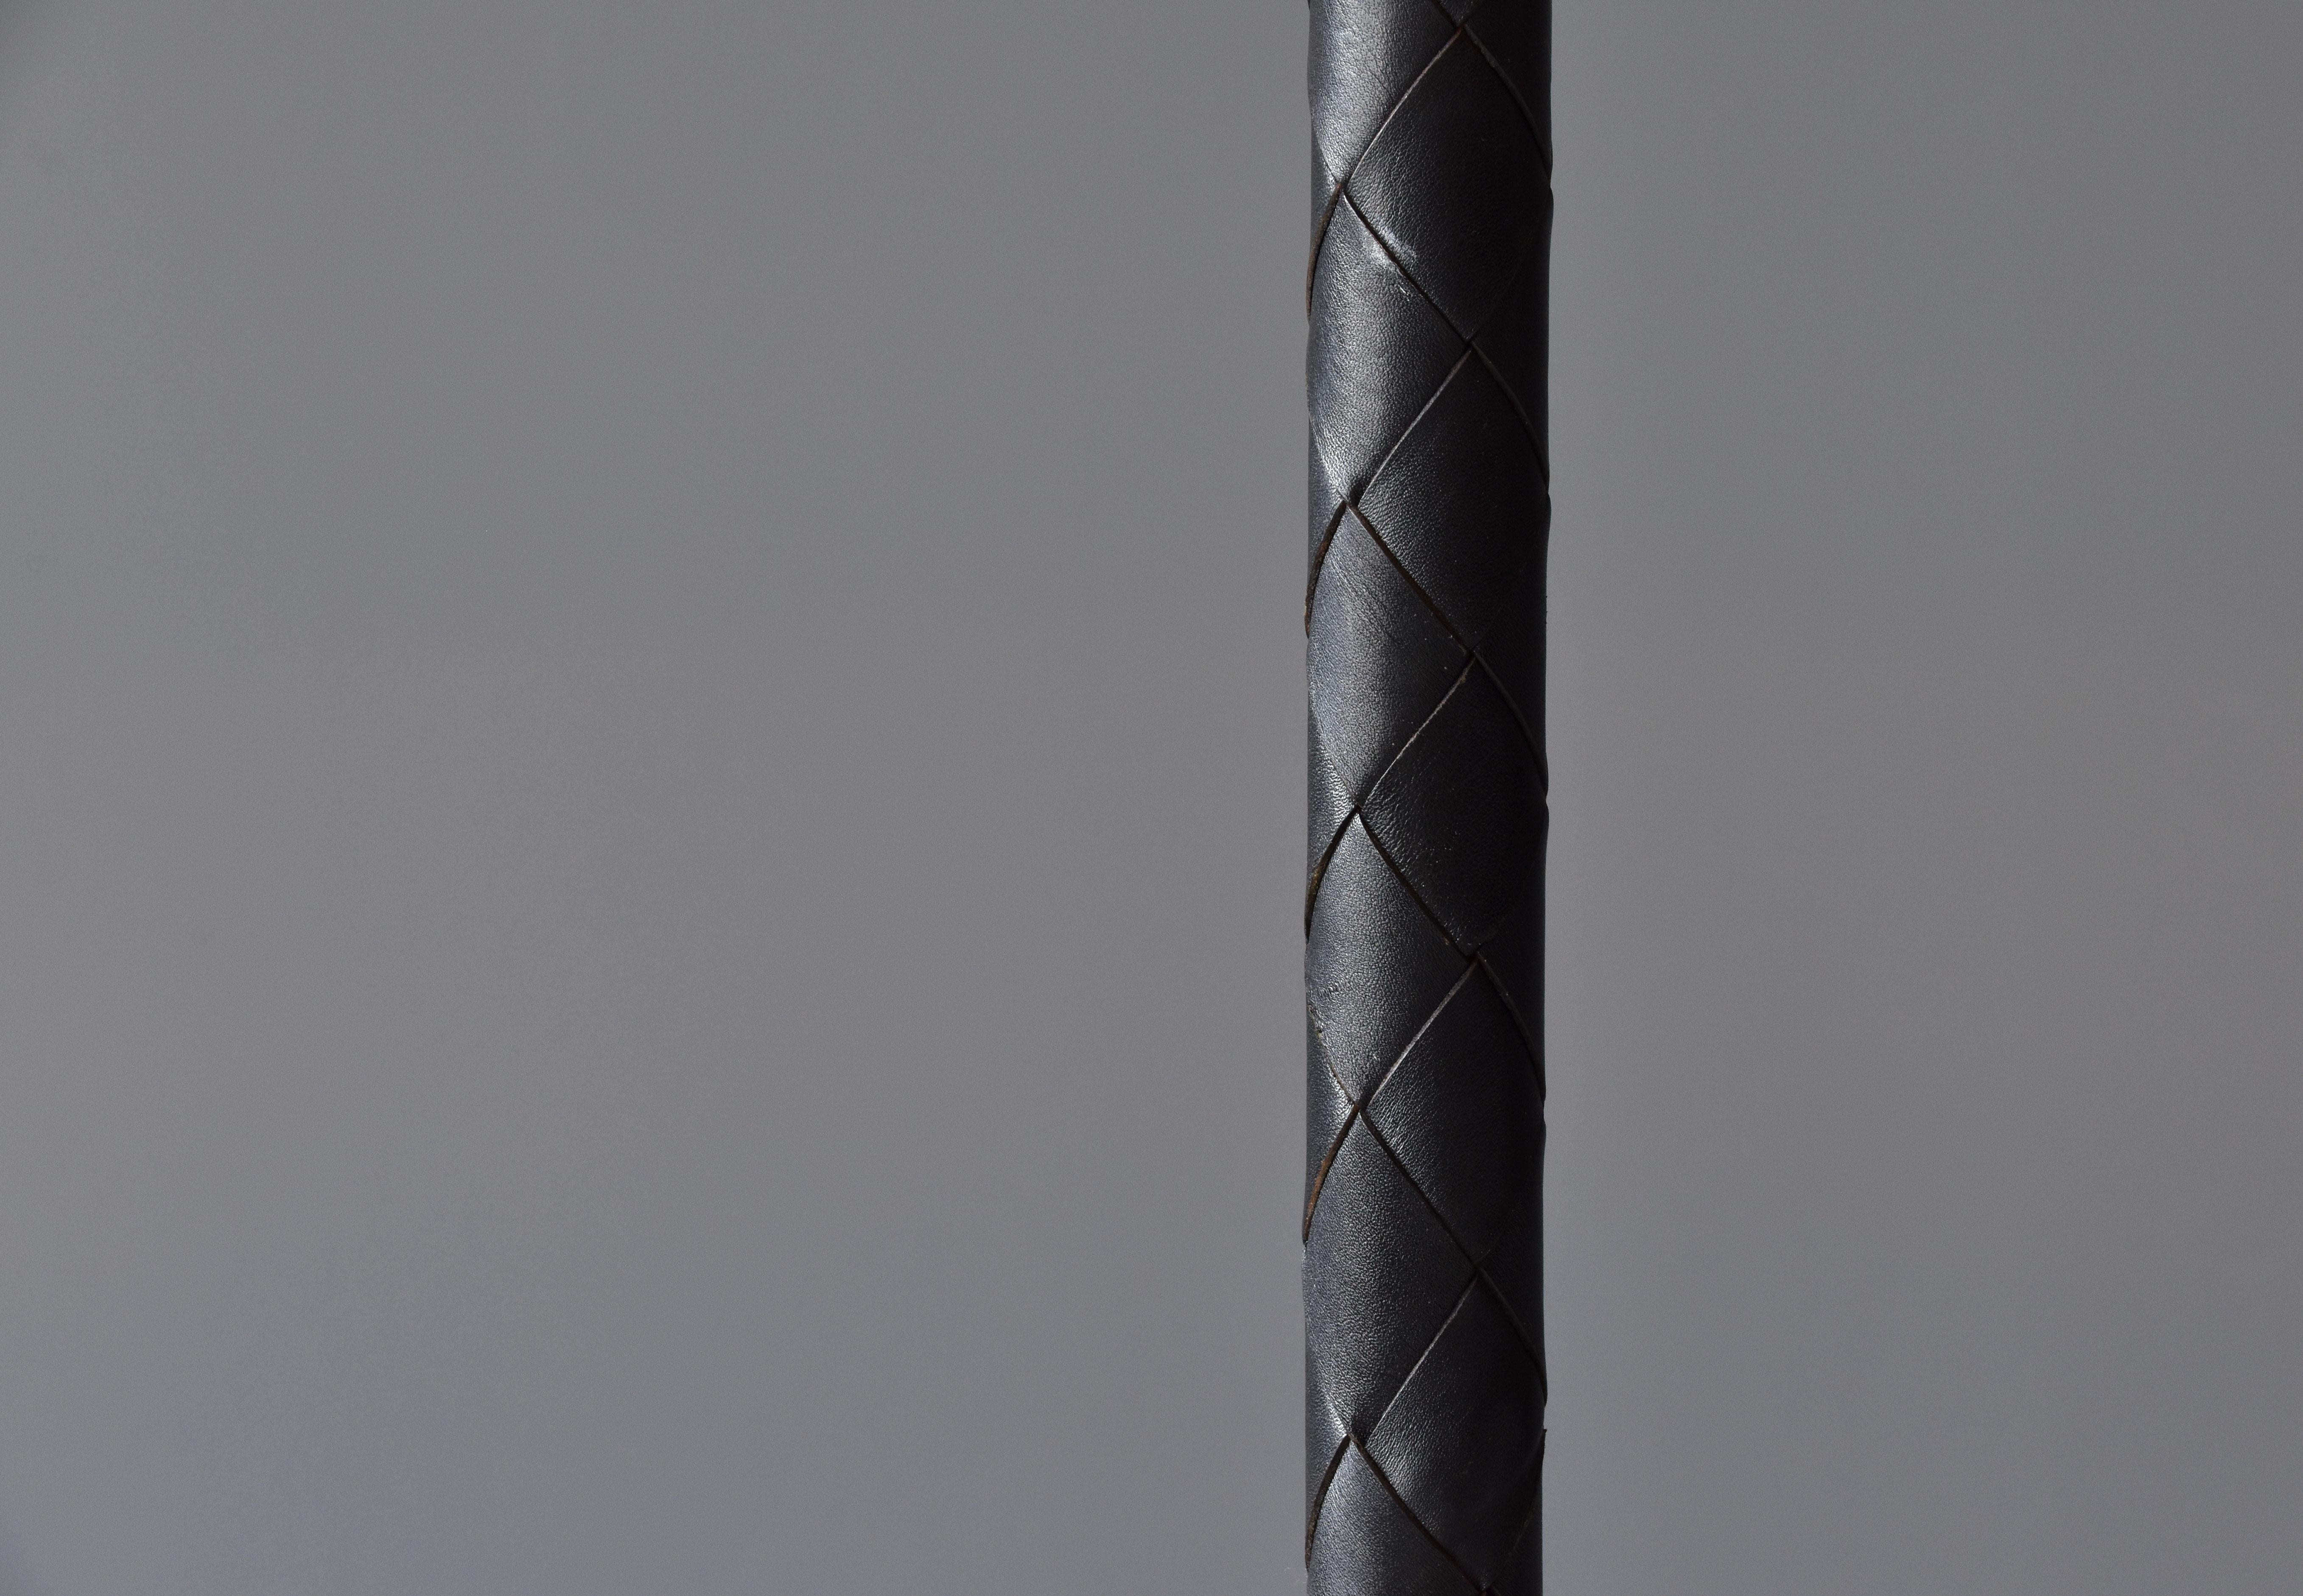 Jo Hammerborg, Floor Lamp Steel Black Dyed Leather Linen, circa 1970s (Ende des 20. Jahrhunderts)